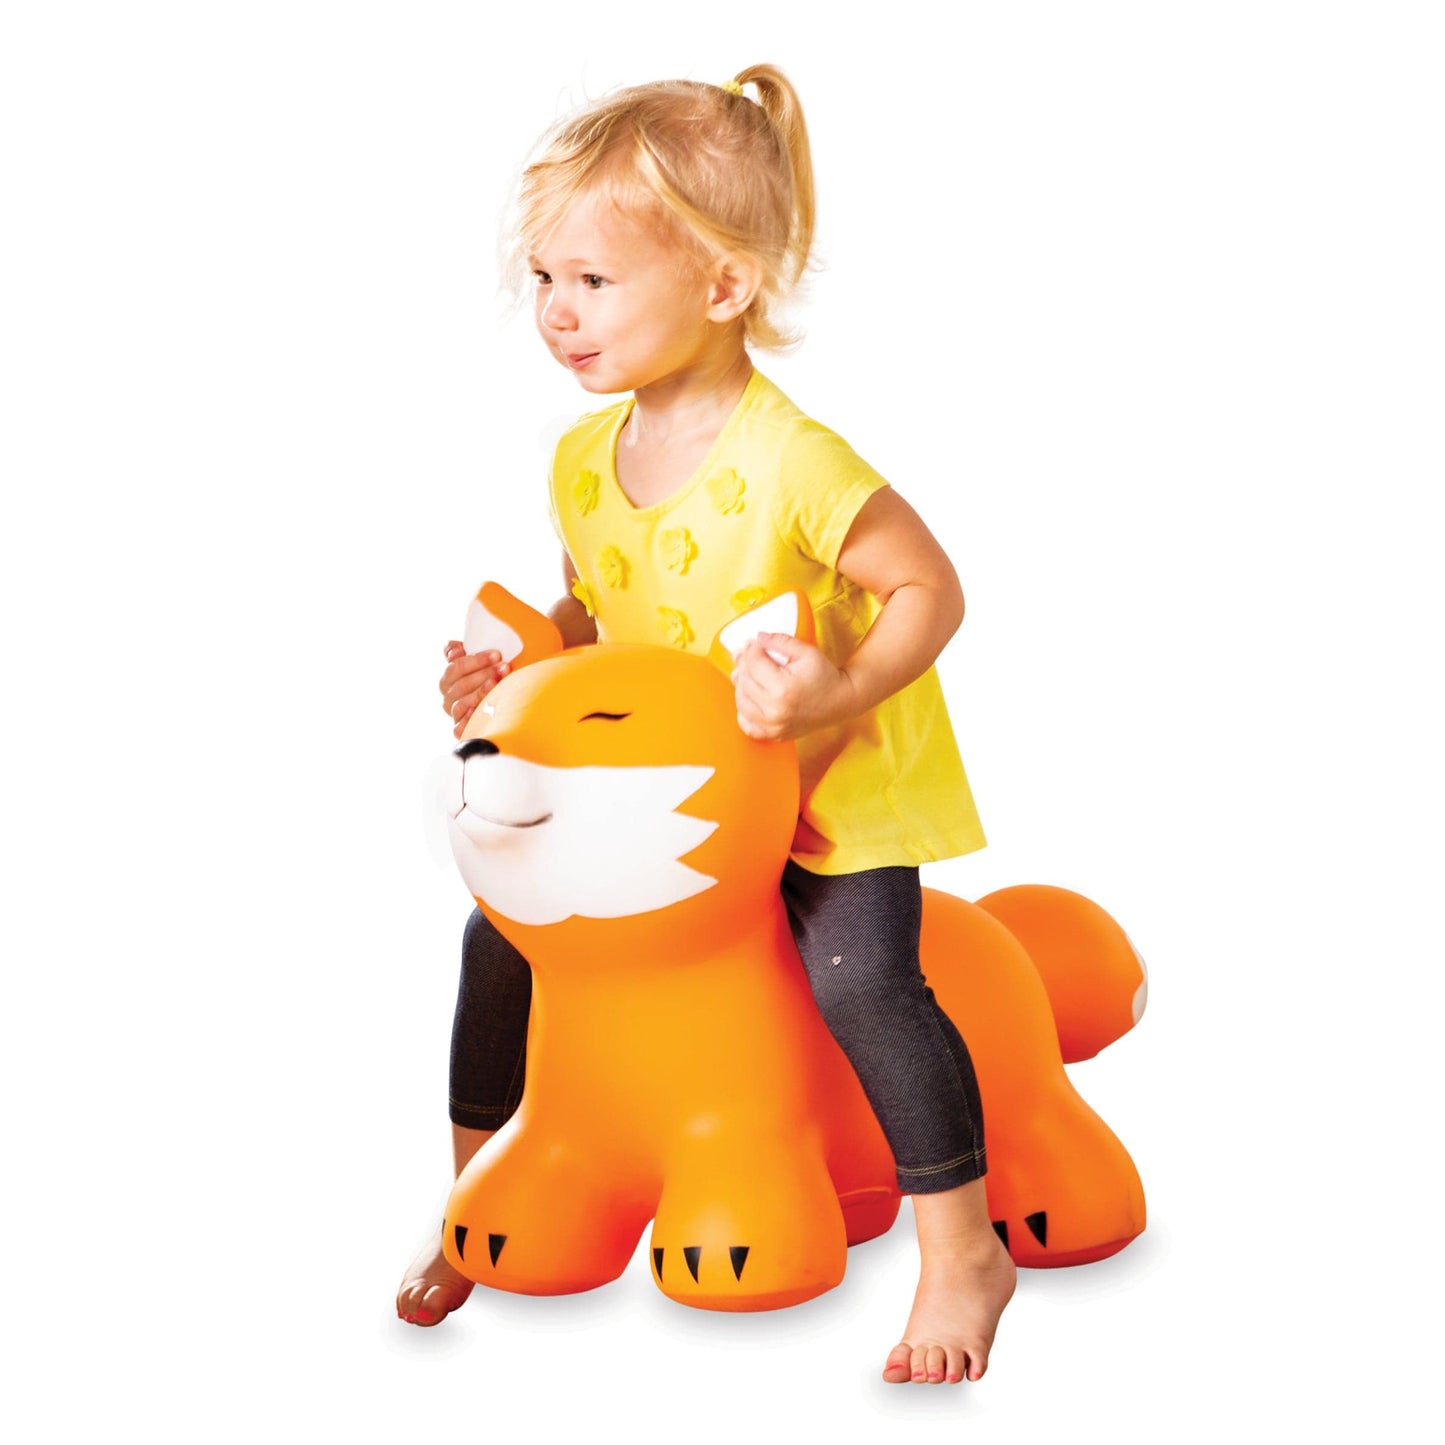 Bouncy Inflatable Animal Jump-Along